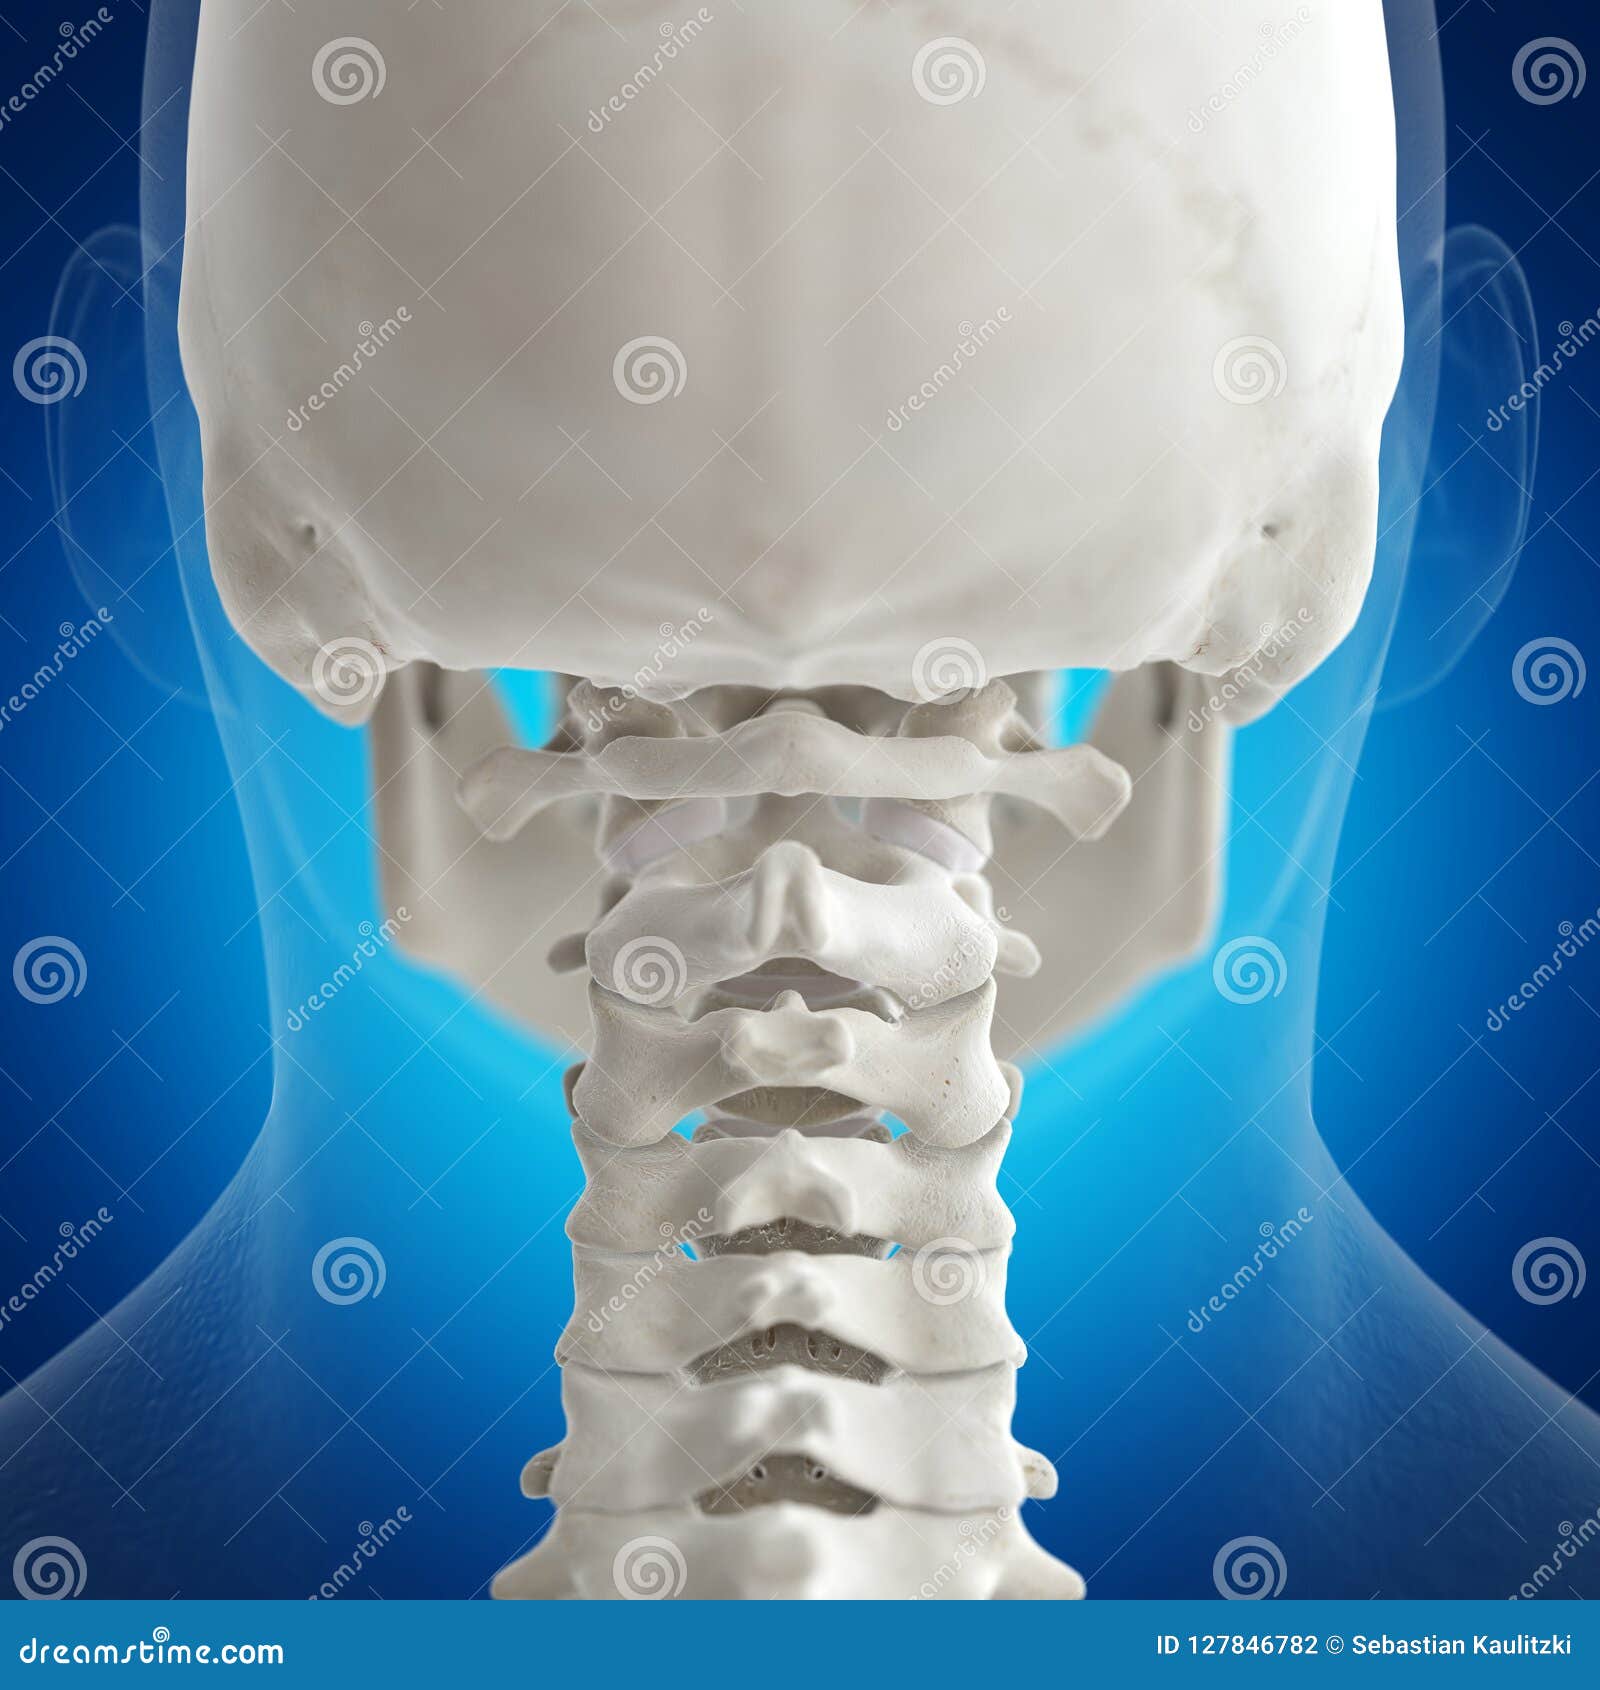 The atlas bone stock illustration. Illustration of curvature - 127846782